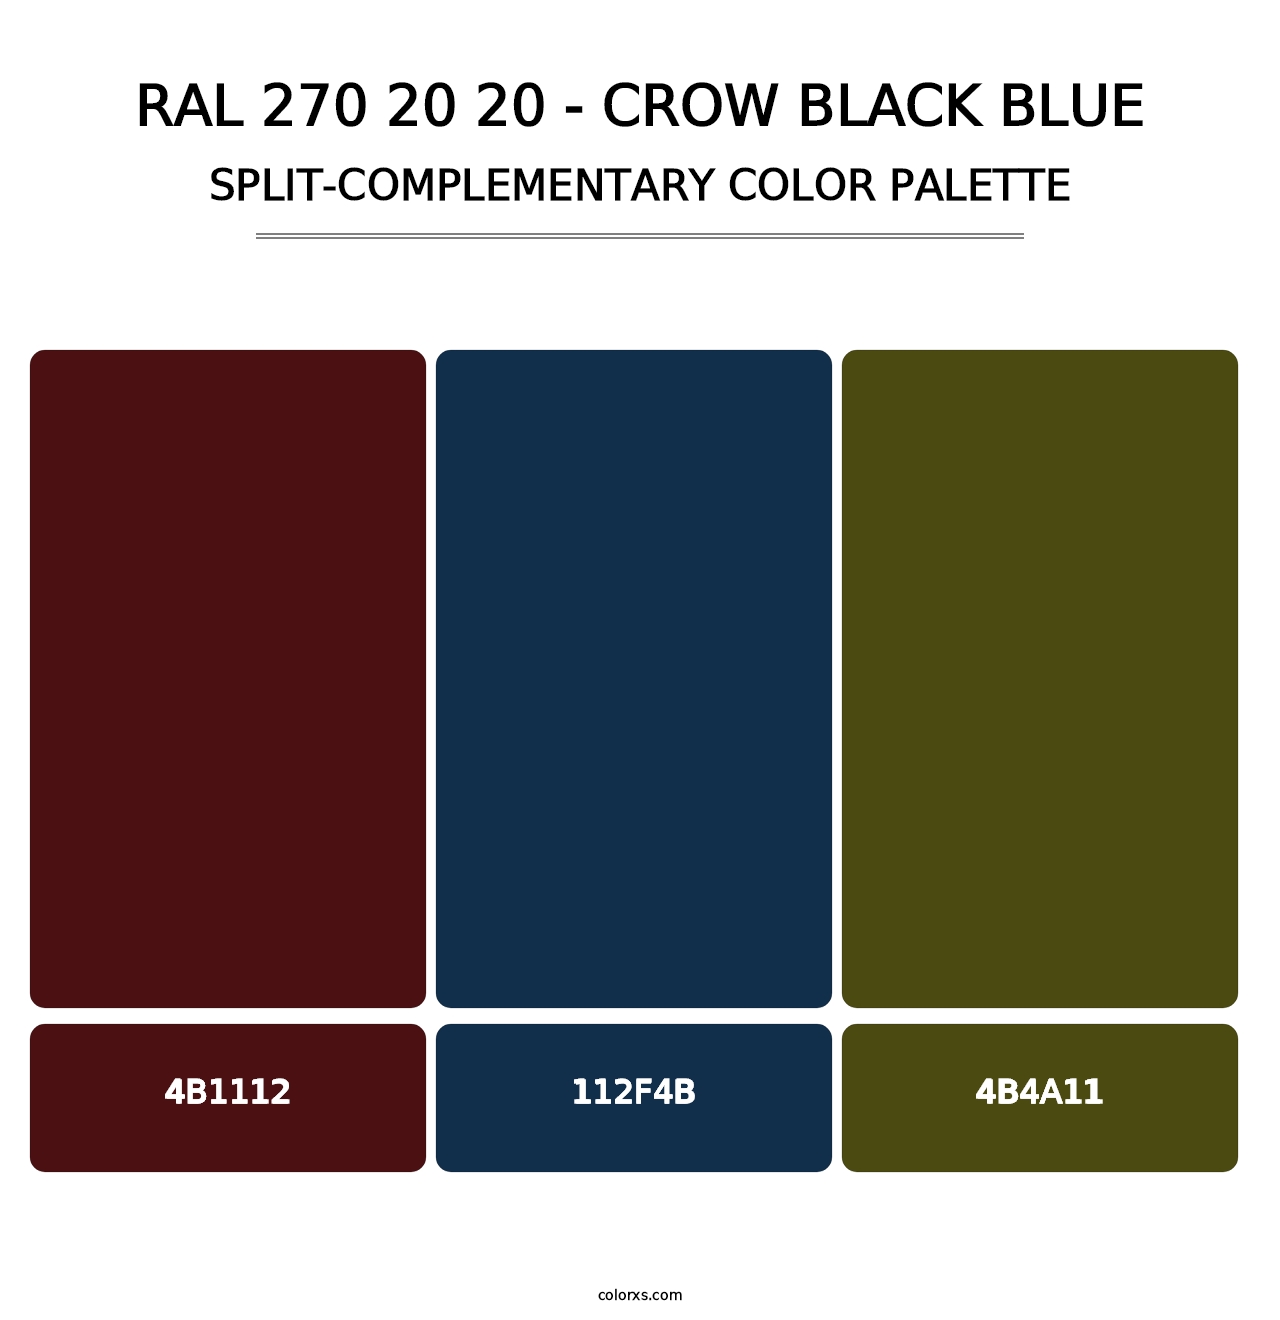 RAL 270 20 20 - Crow Black Blue - Split-Complementary Color Palette